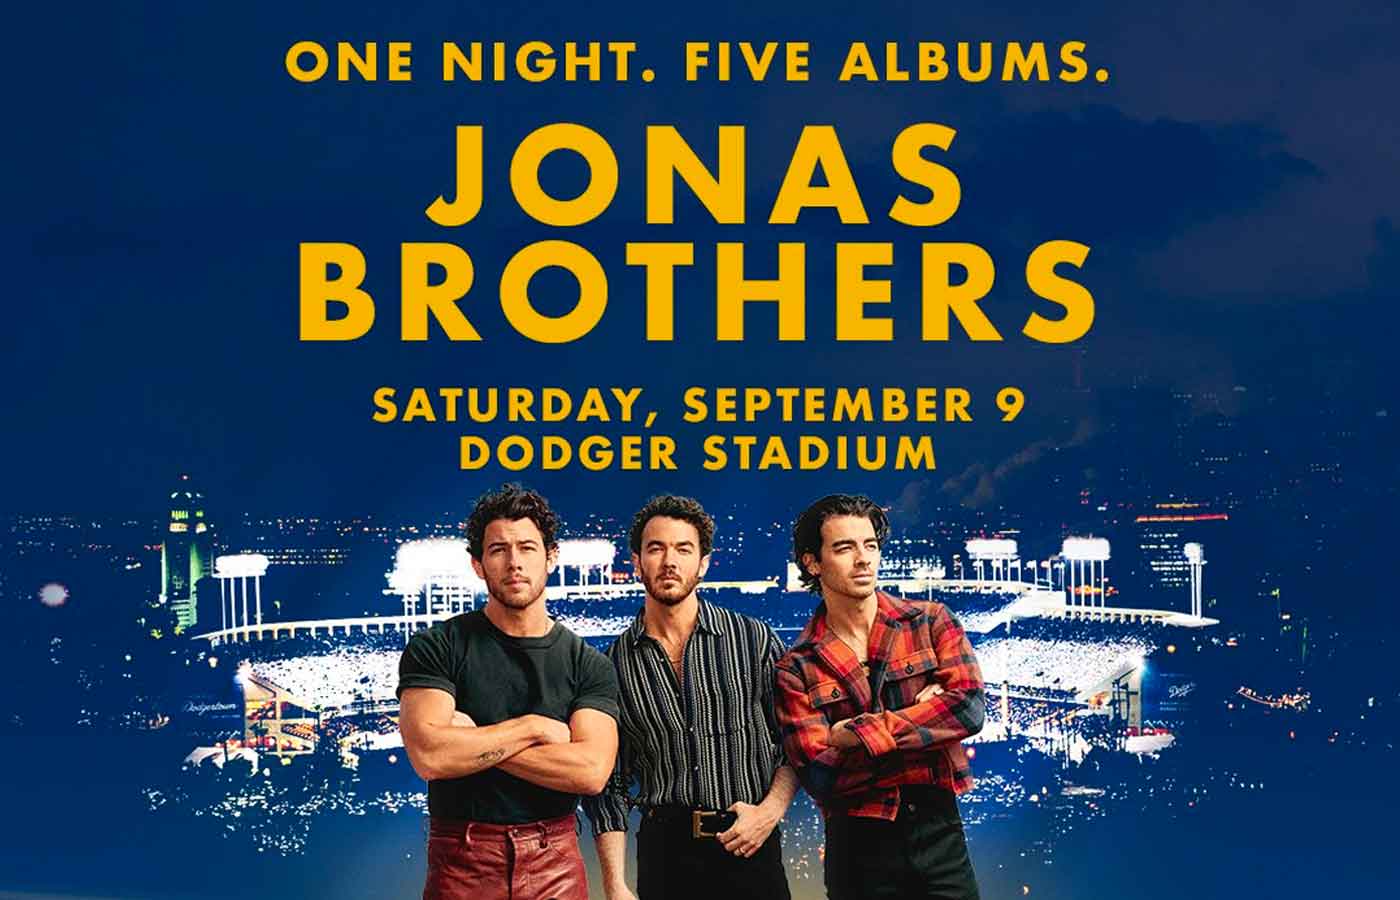 Jonas Brothers at Dodger Stadium